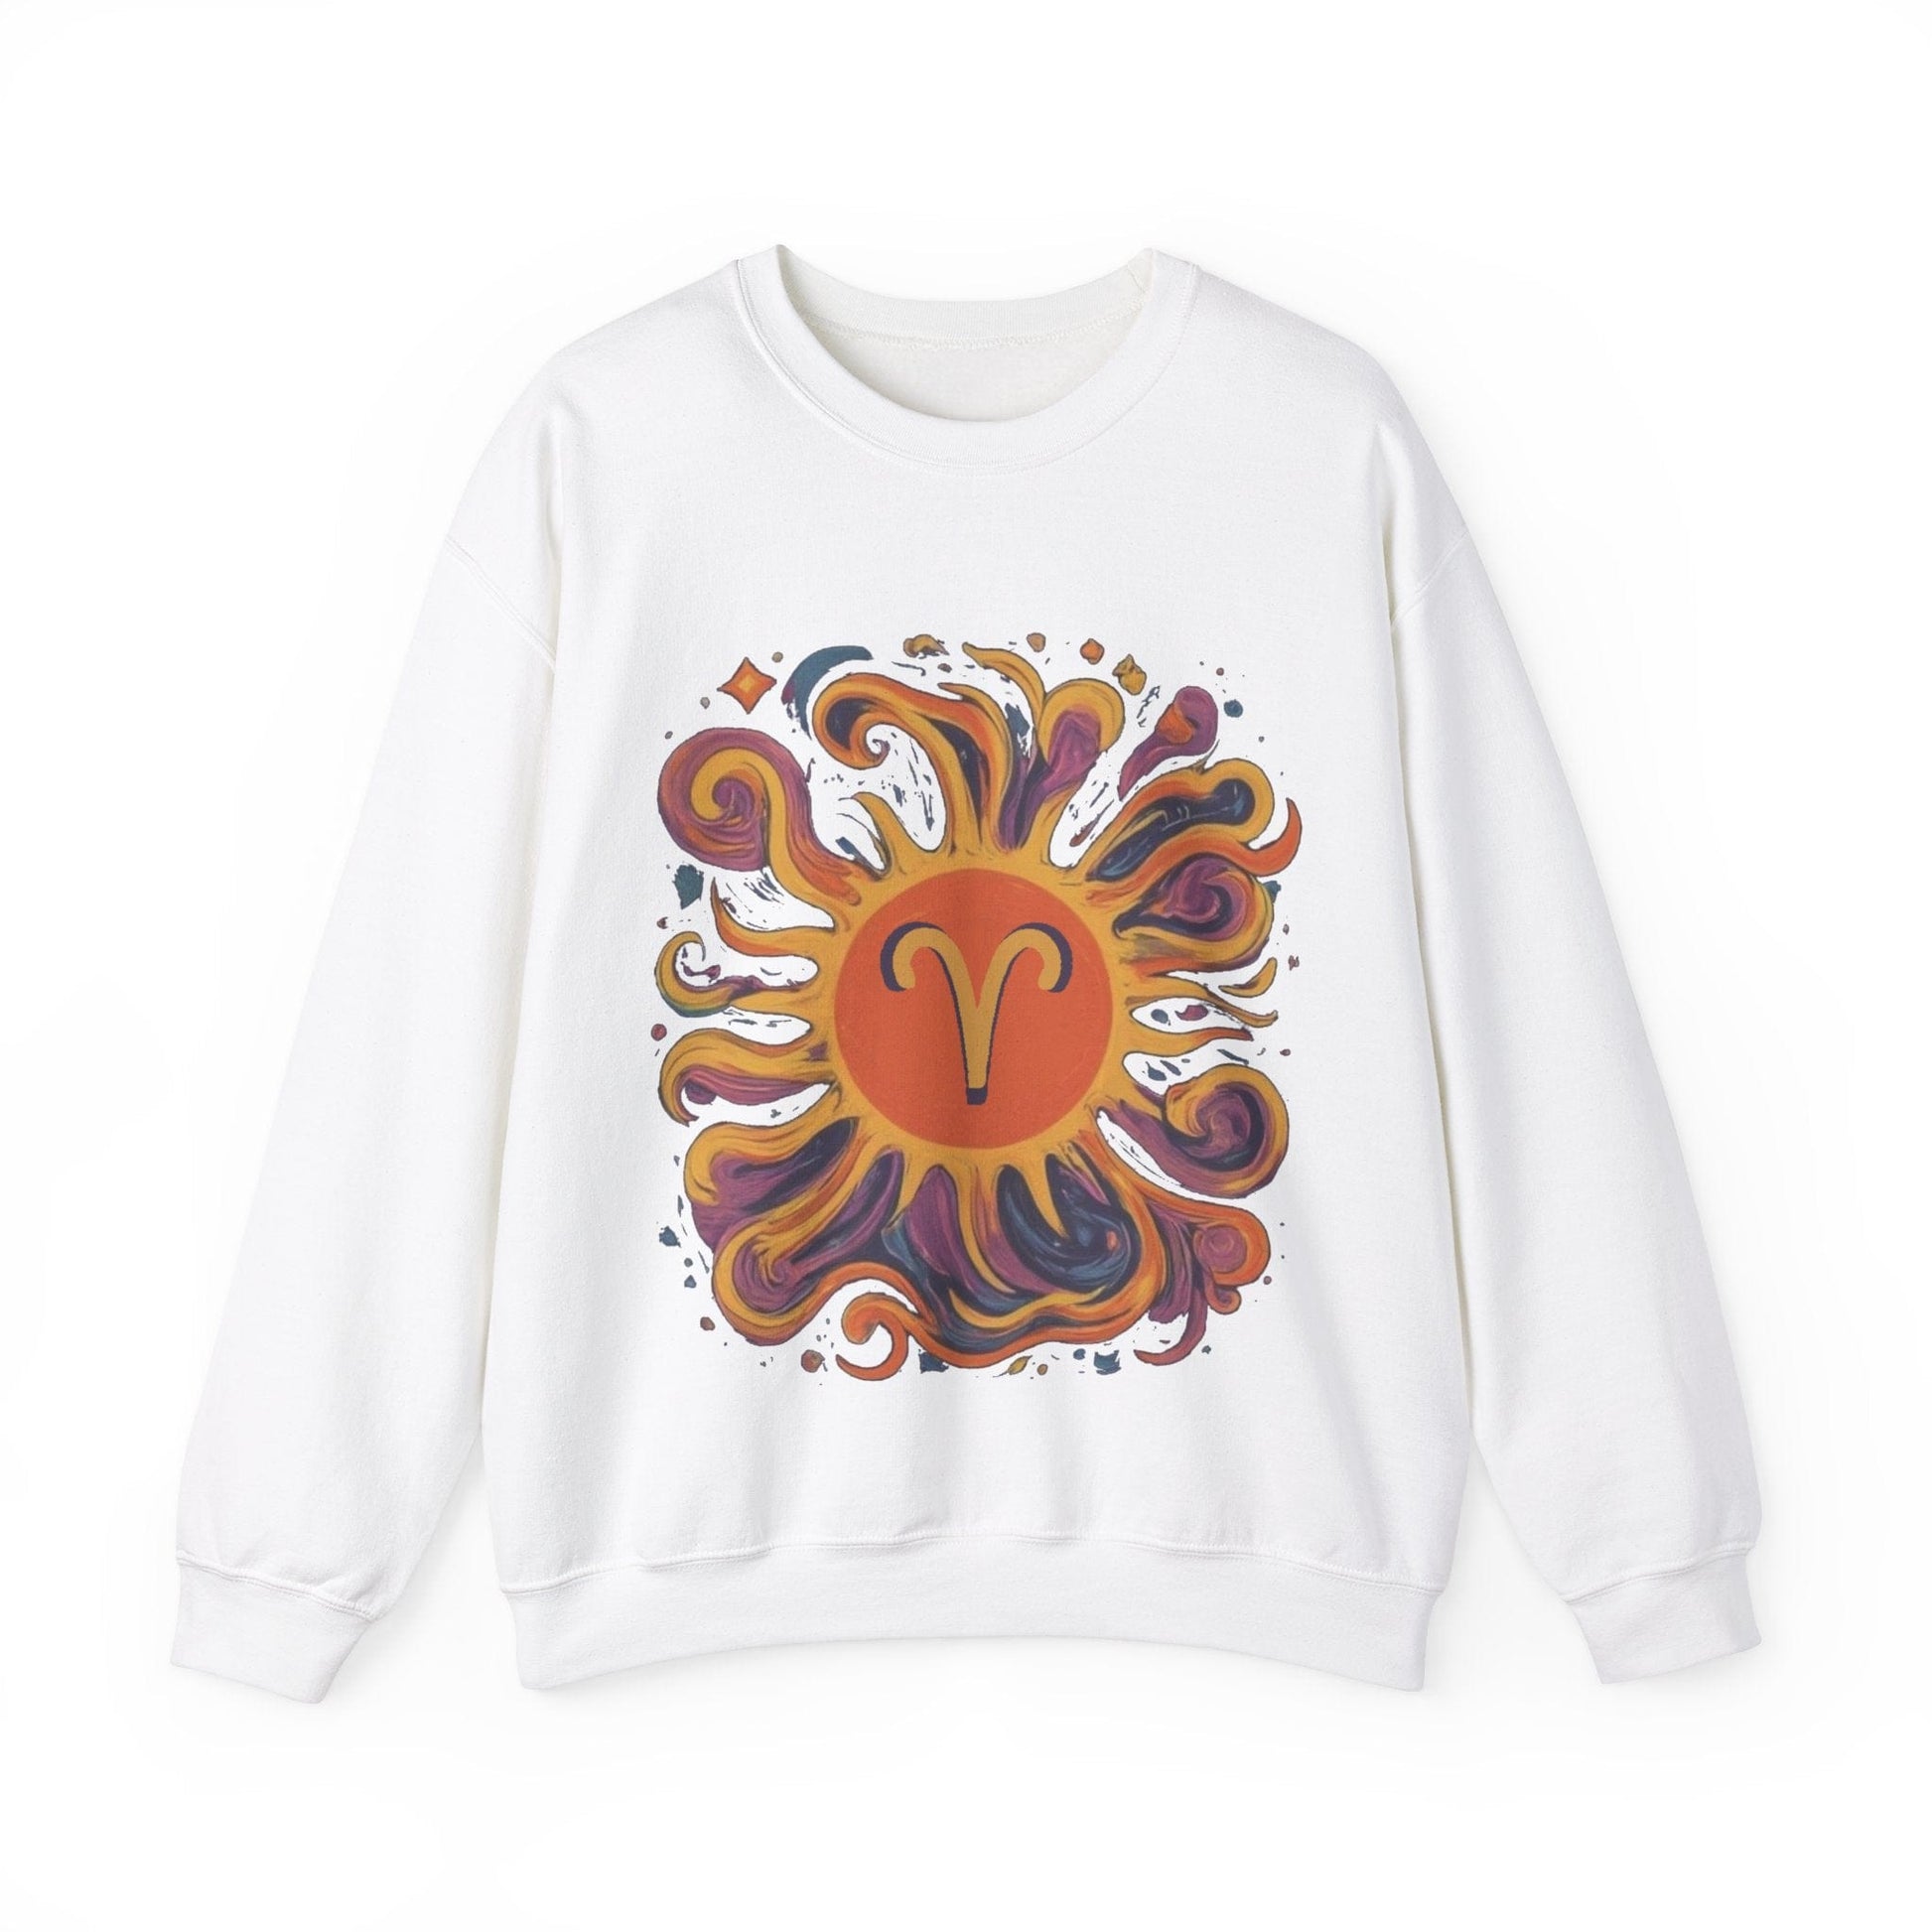 Sweatshirt S / White Aries Energetic Swirl Soft Sweater: Ignite Your Cozy Side